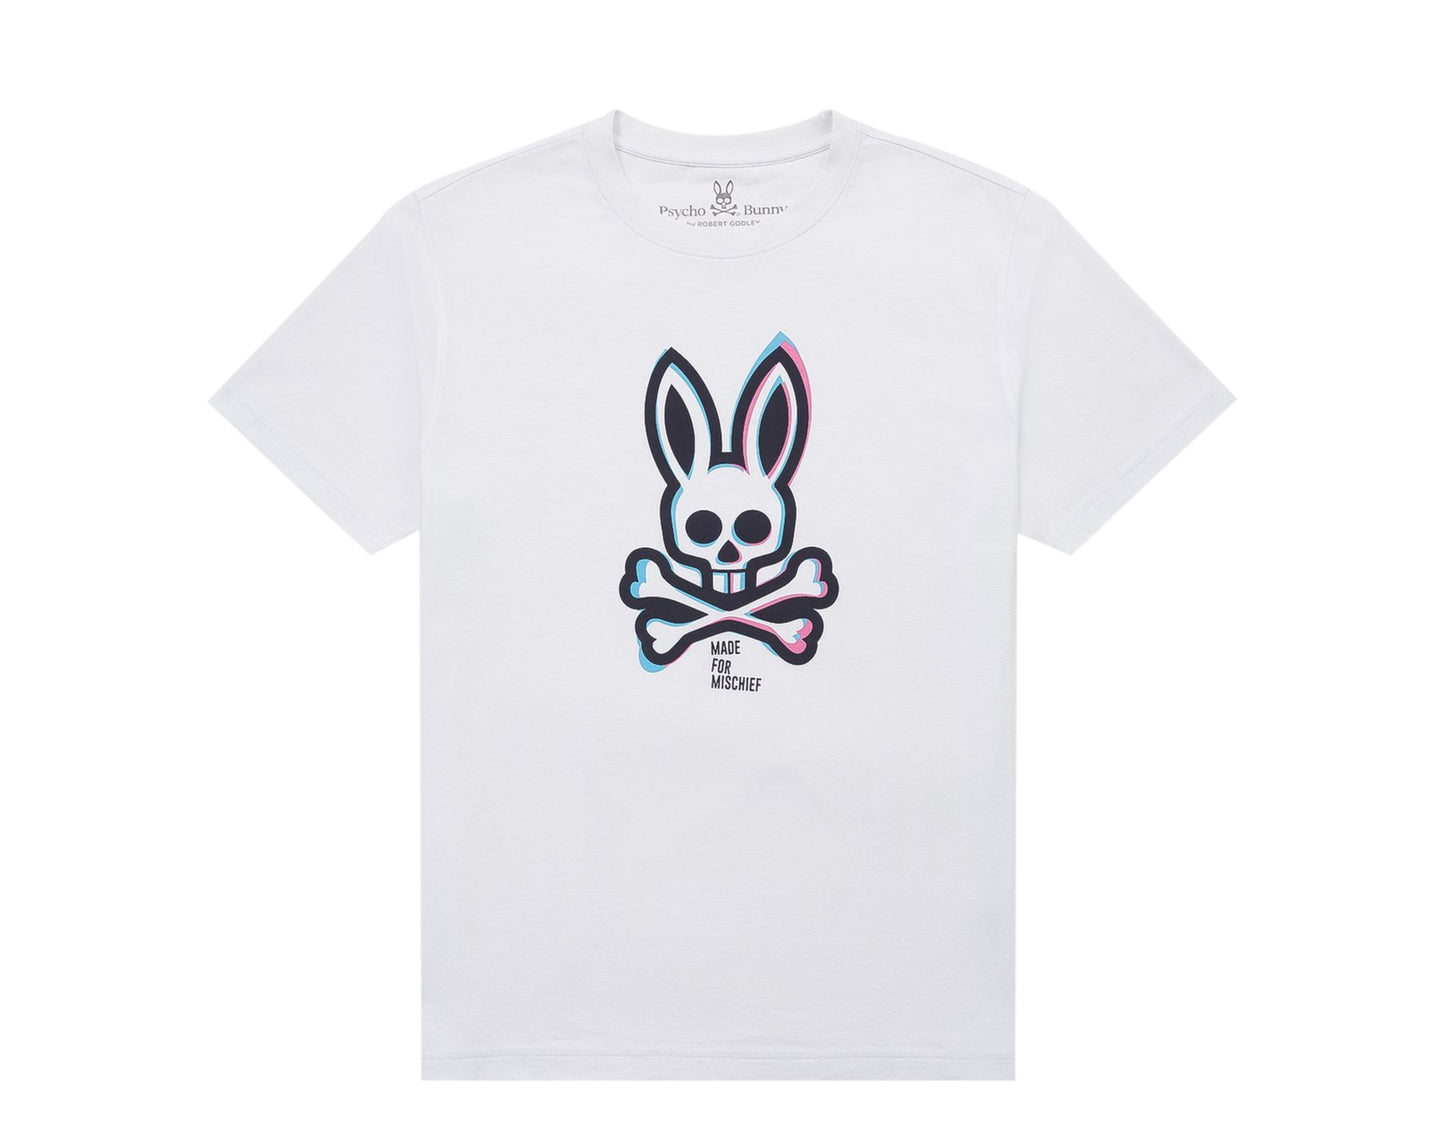 Psycho Bunny Loyn Graphic White Men's Tee Shirt B6U297E1PC-WHT